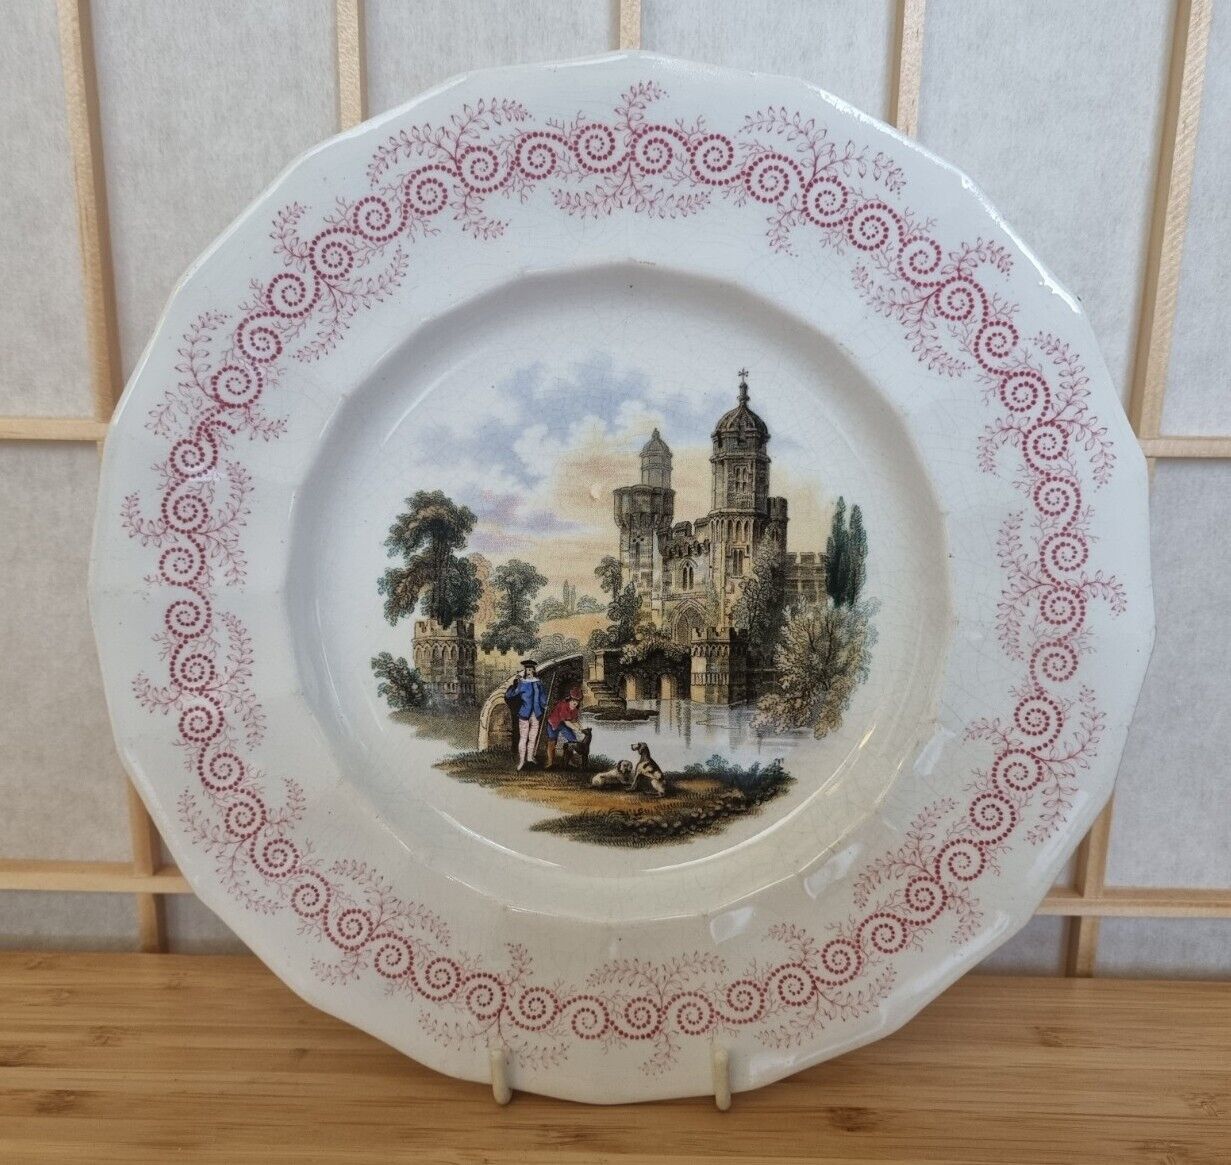 Antique Wedgwood Imitation Plate WS & Co 1800s English Historical House Scene